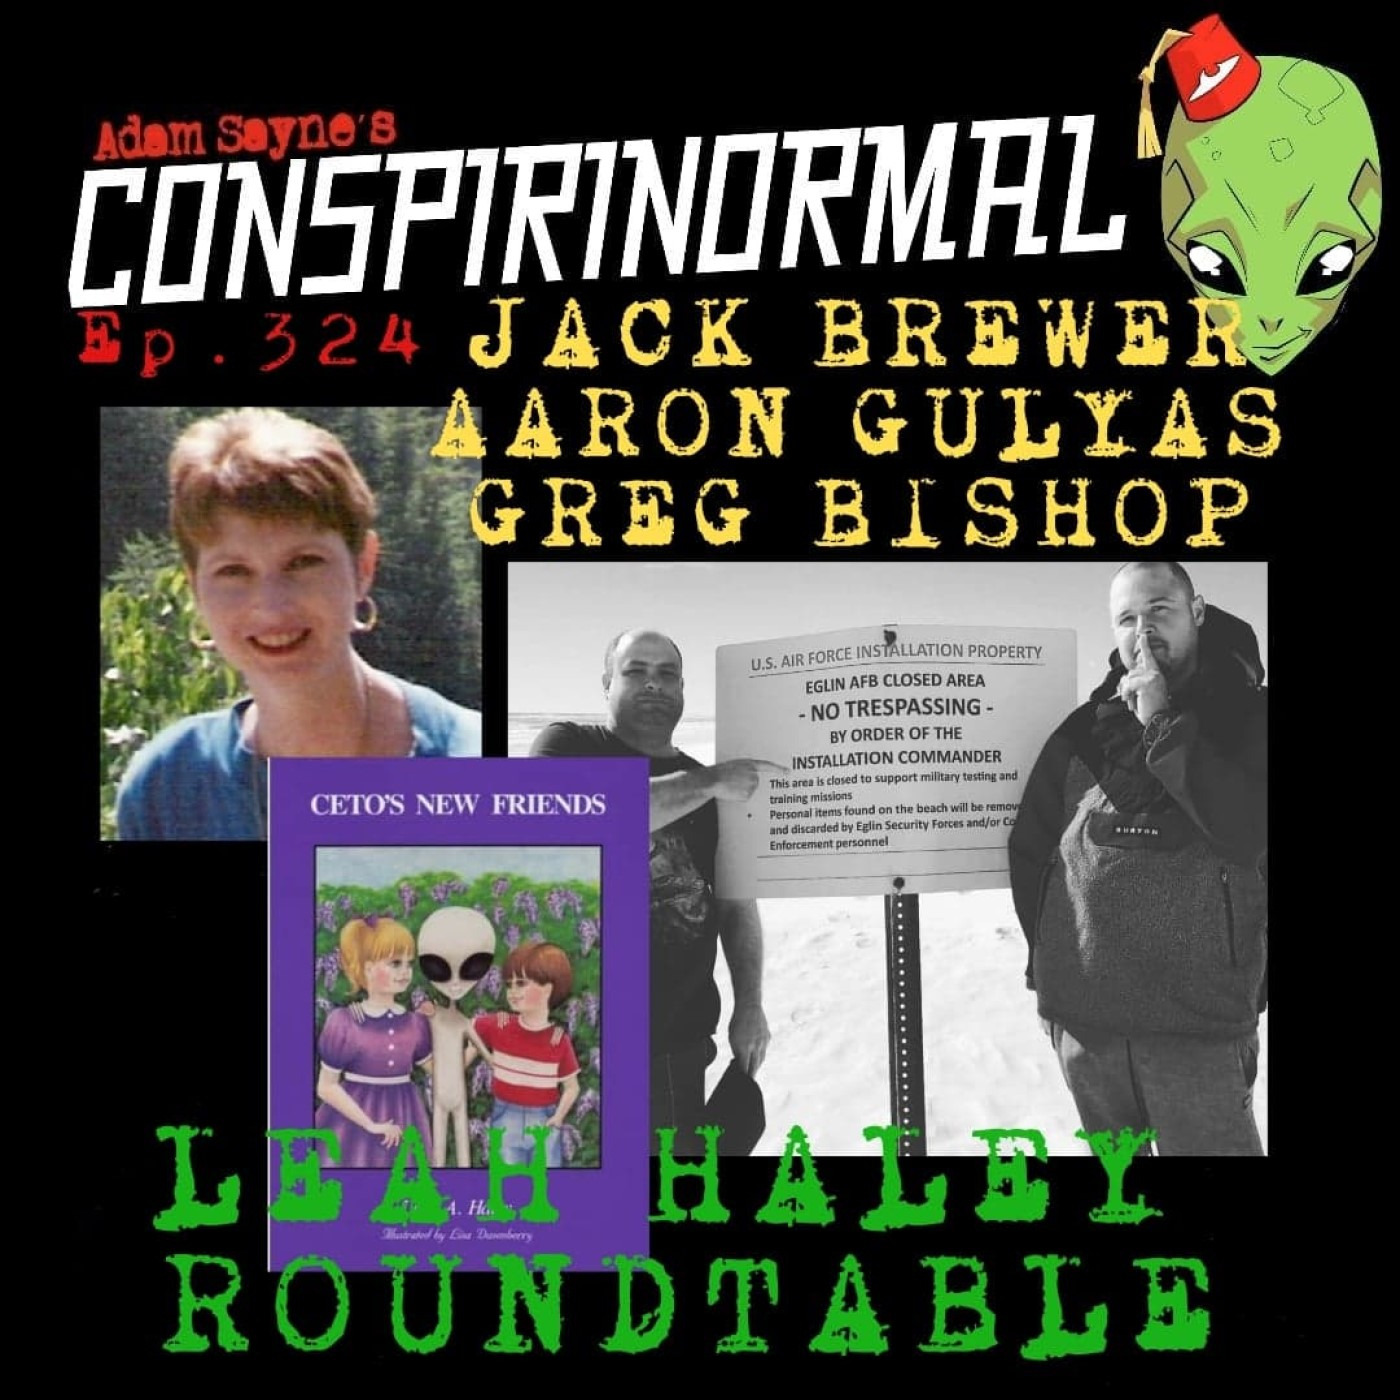 Conspirinormal Episode 324- Leah Haley Roundtable (Aaron Gulyas, Greg Bishop, Jack Brewer)